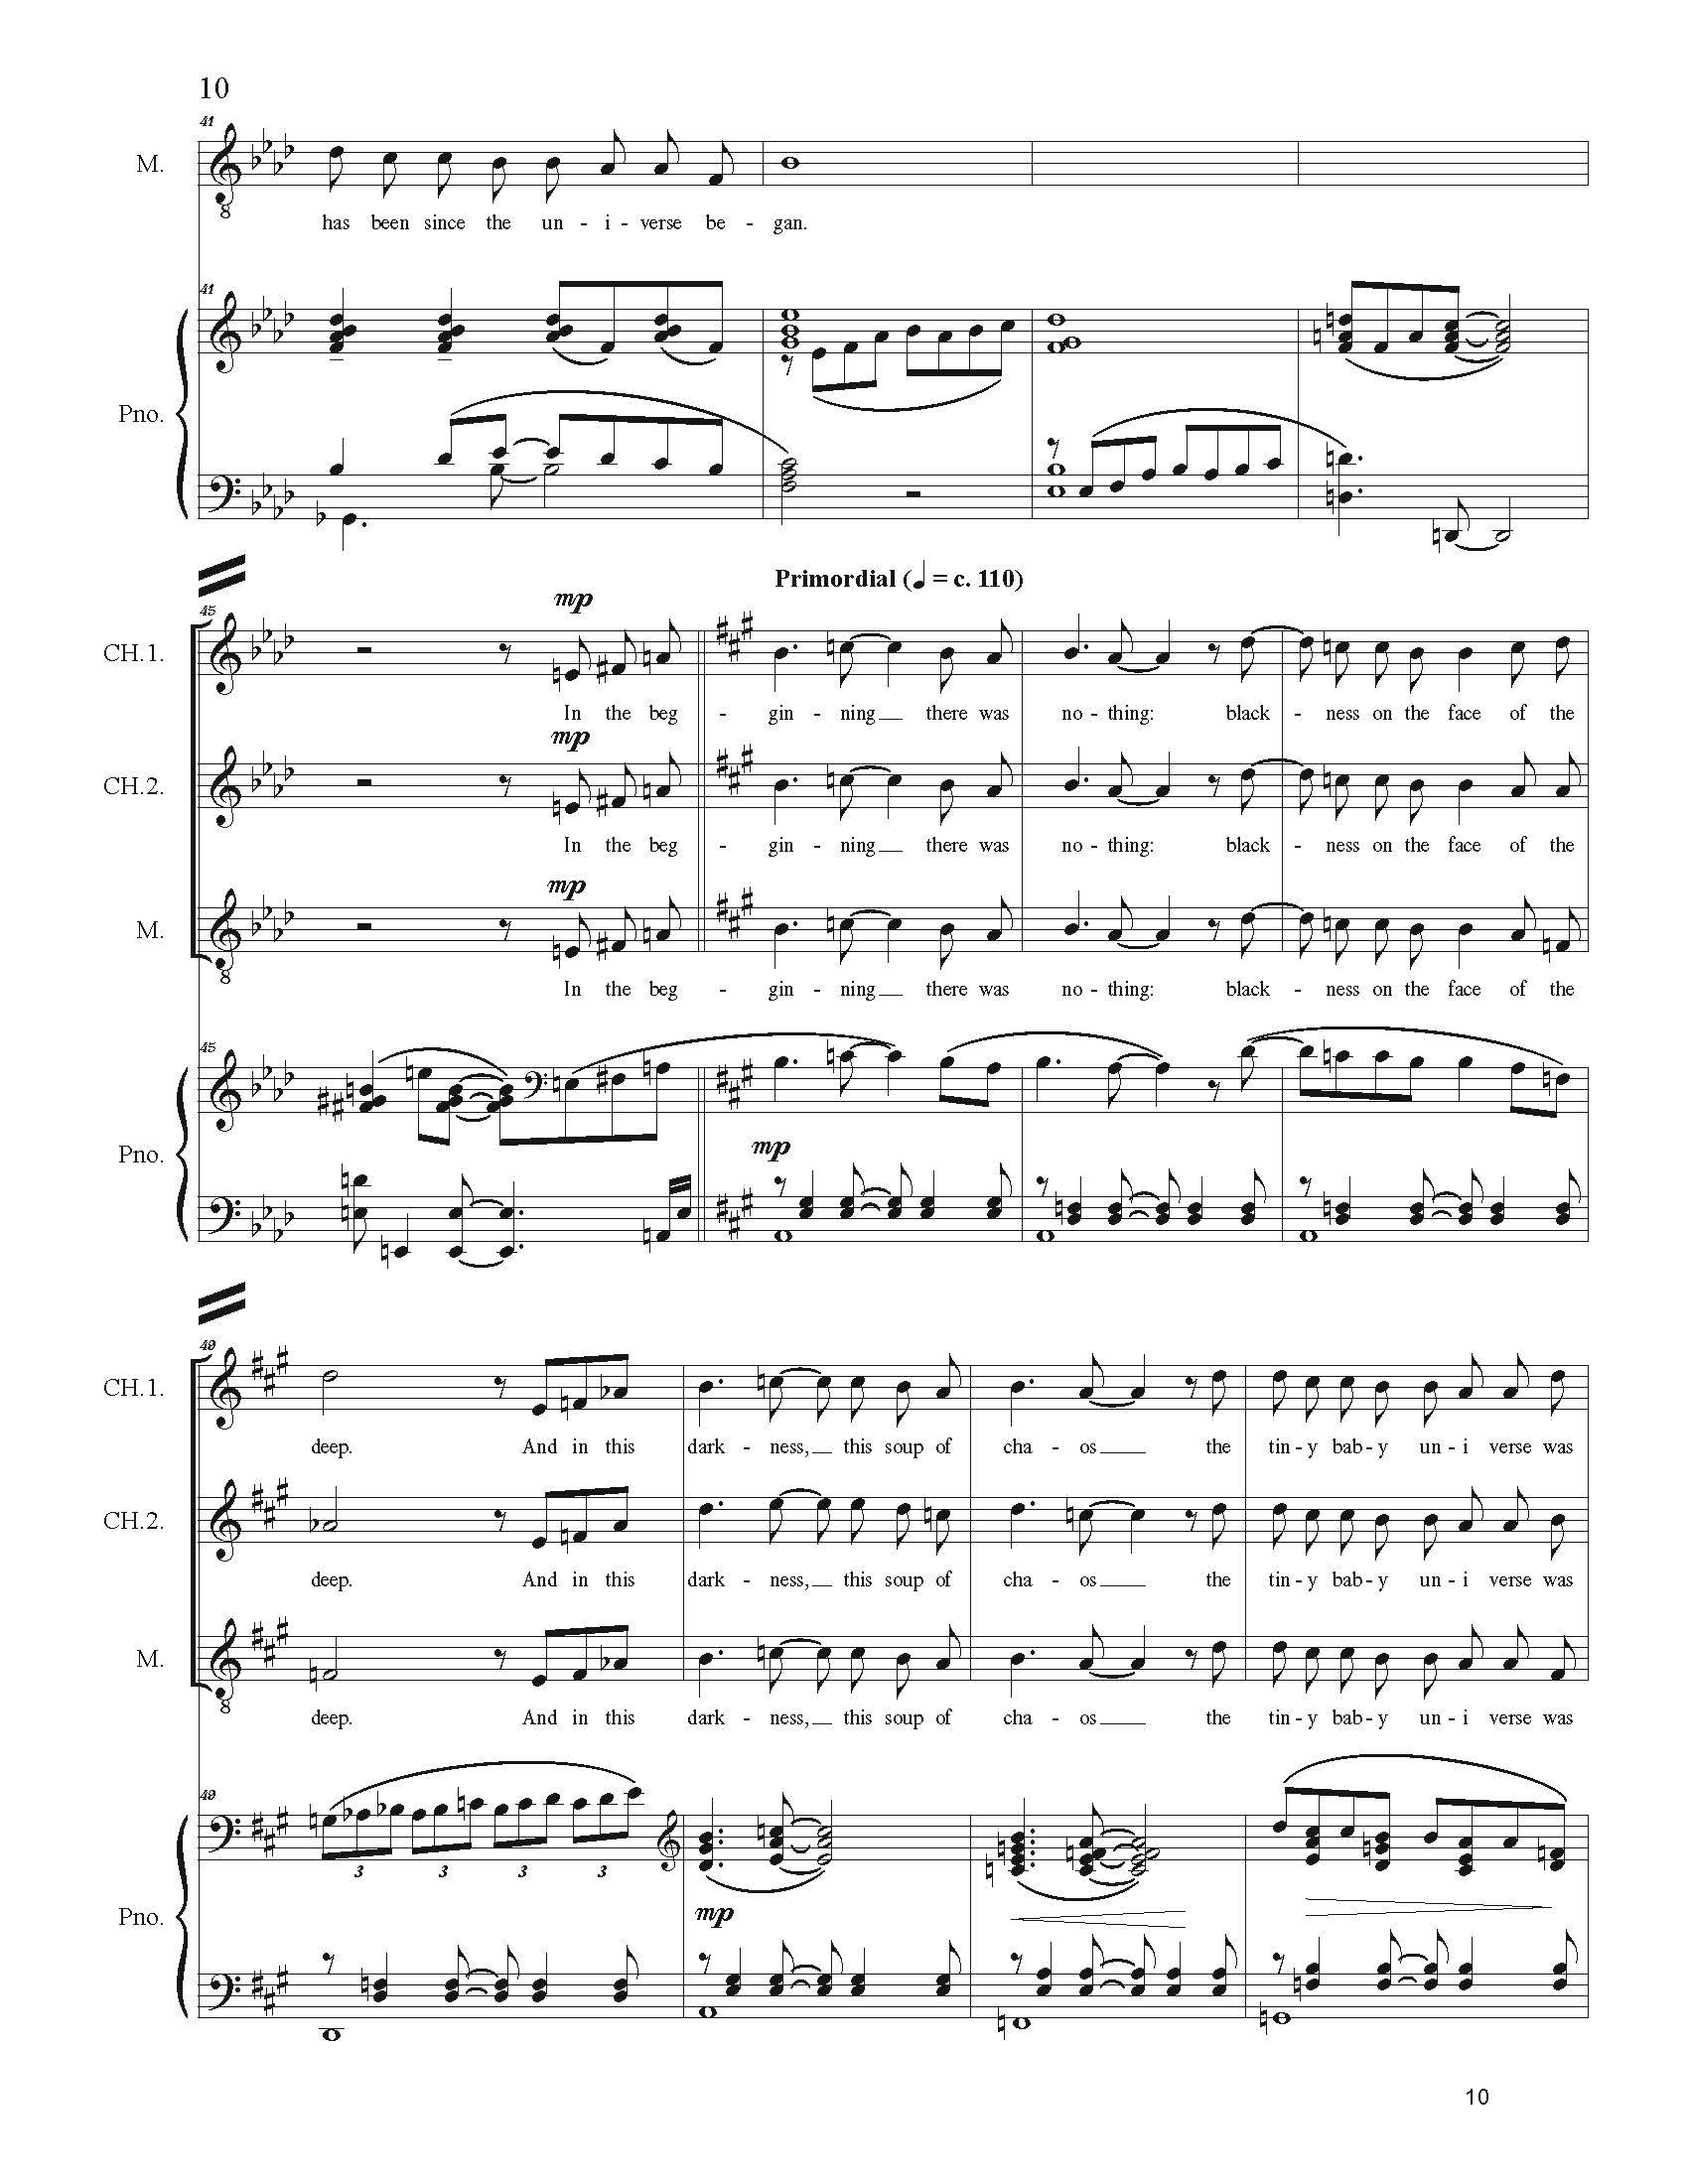 FULL PIANO VOCAL SCORE DRAFT 1 - Score_Page_010.jpg